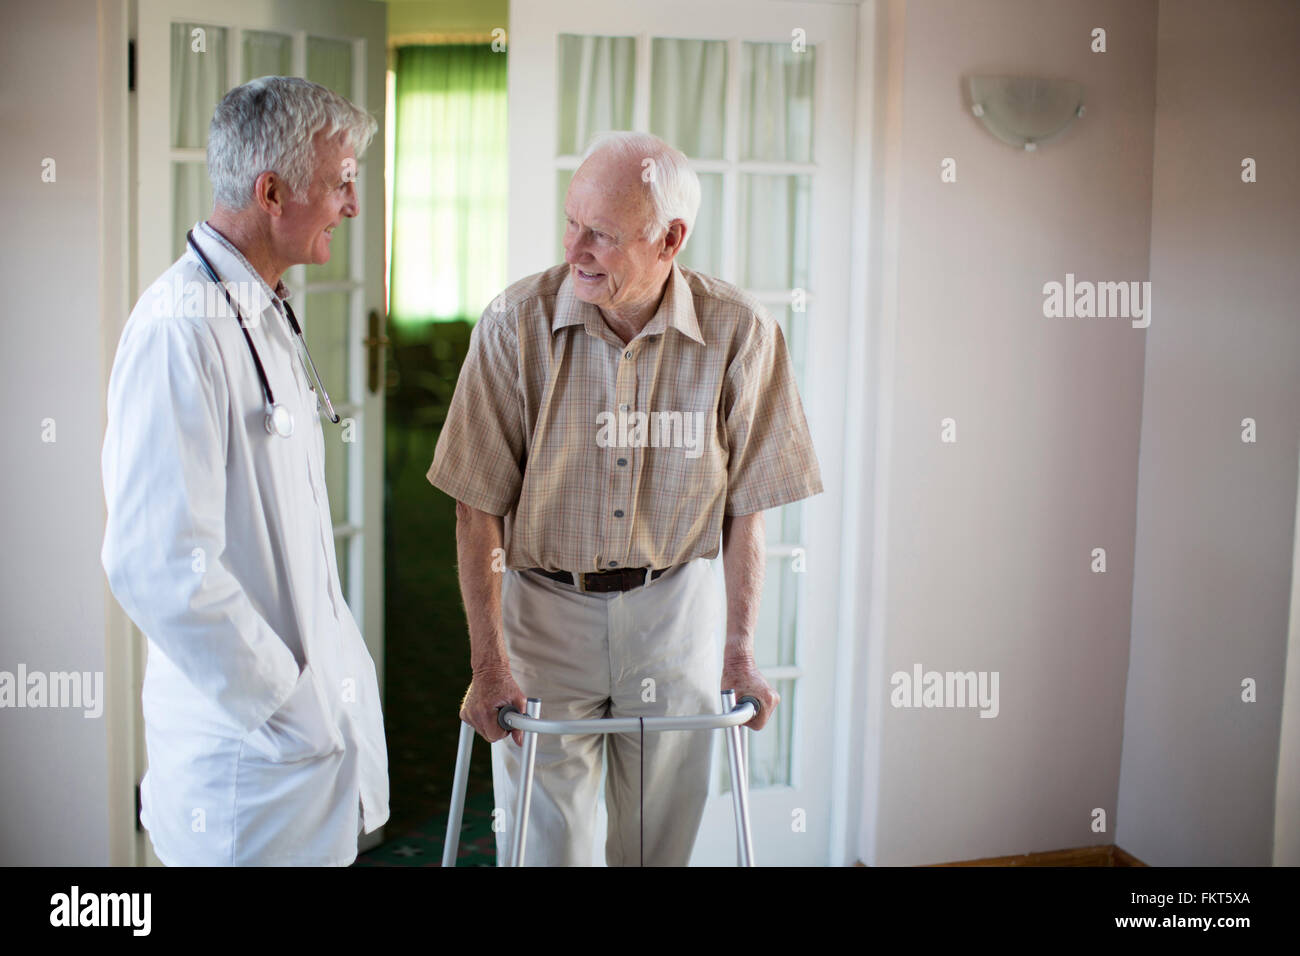 Doctor talking to patient using walker Stock Photo